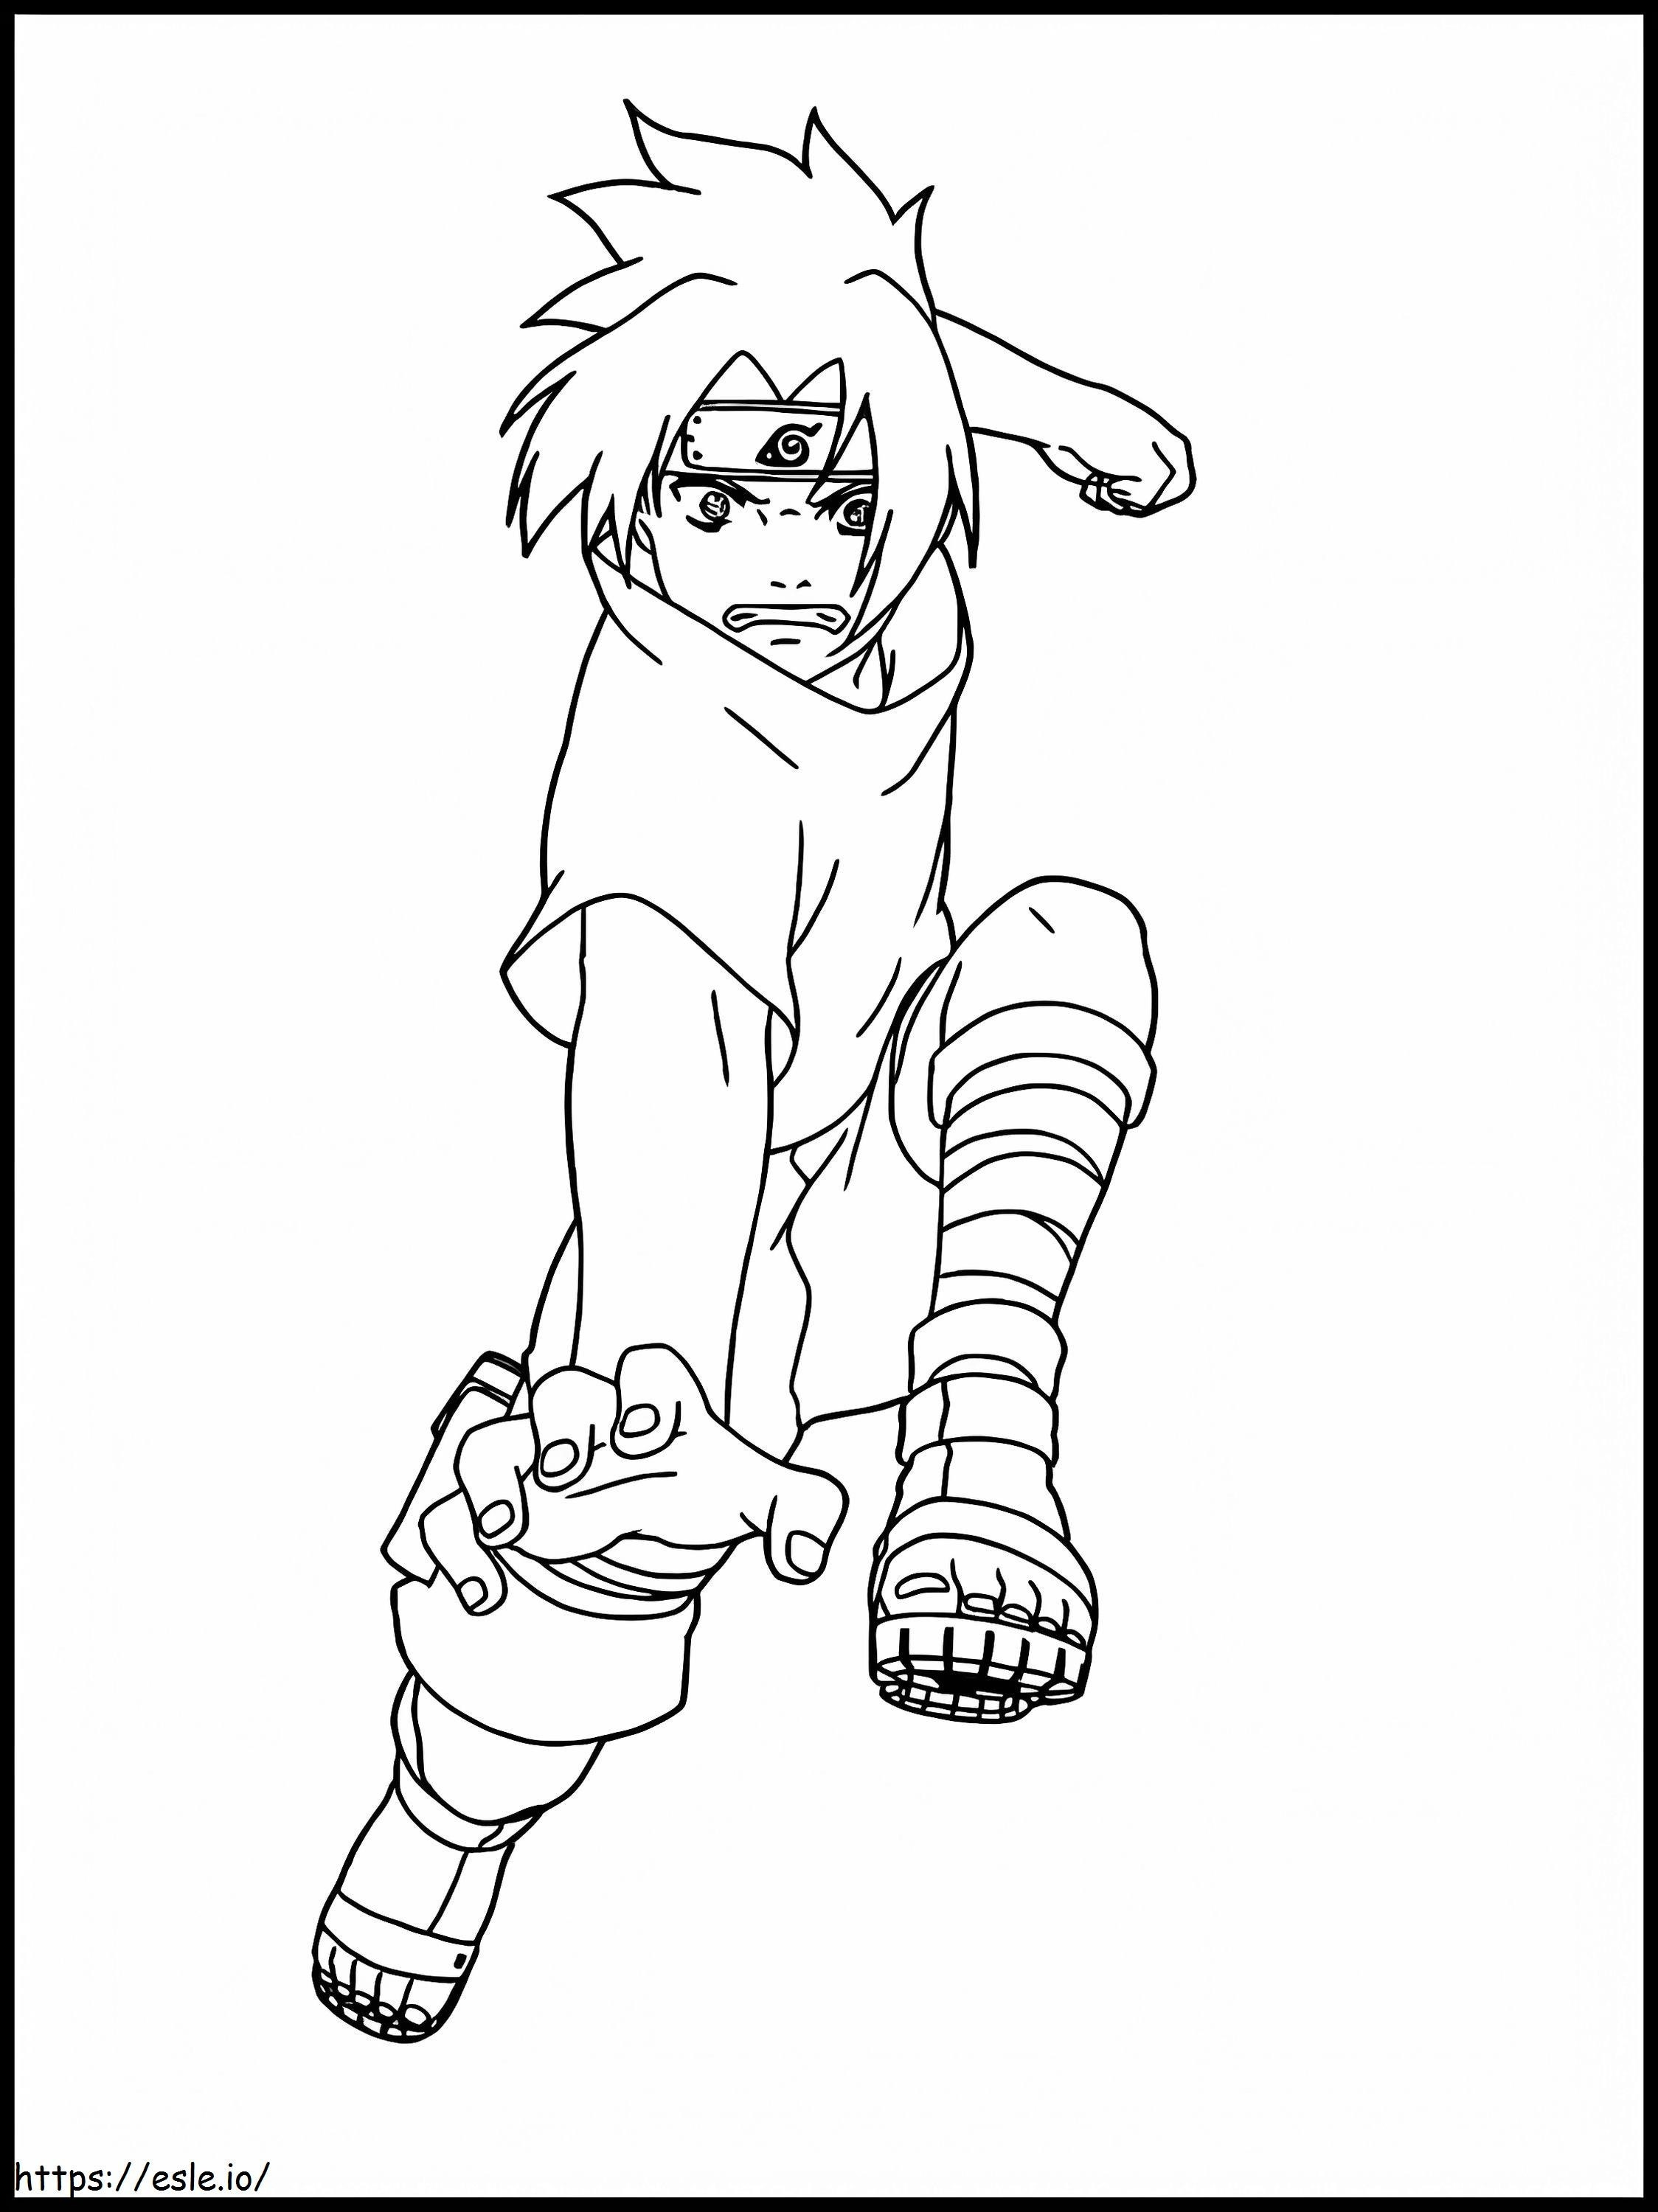 Little Sasuke Attack coloring page